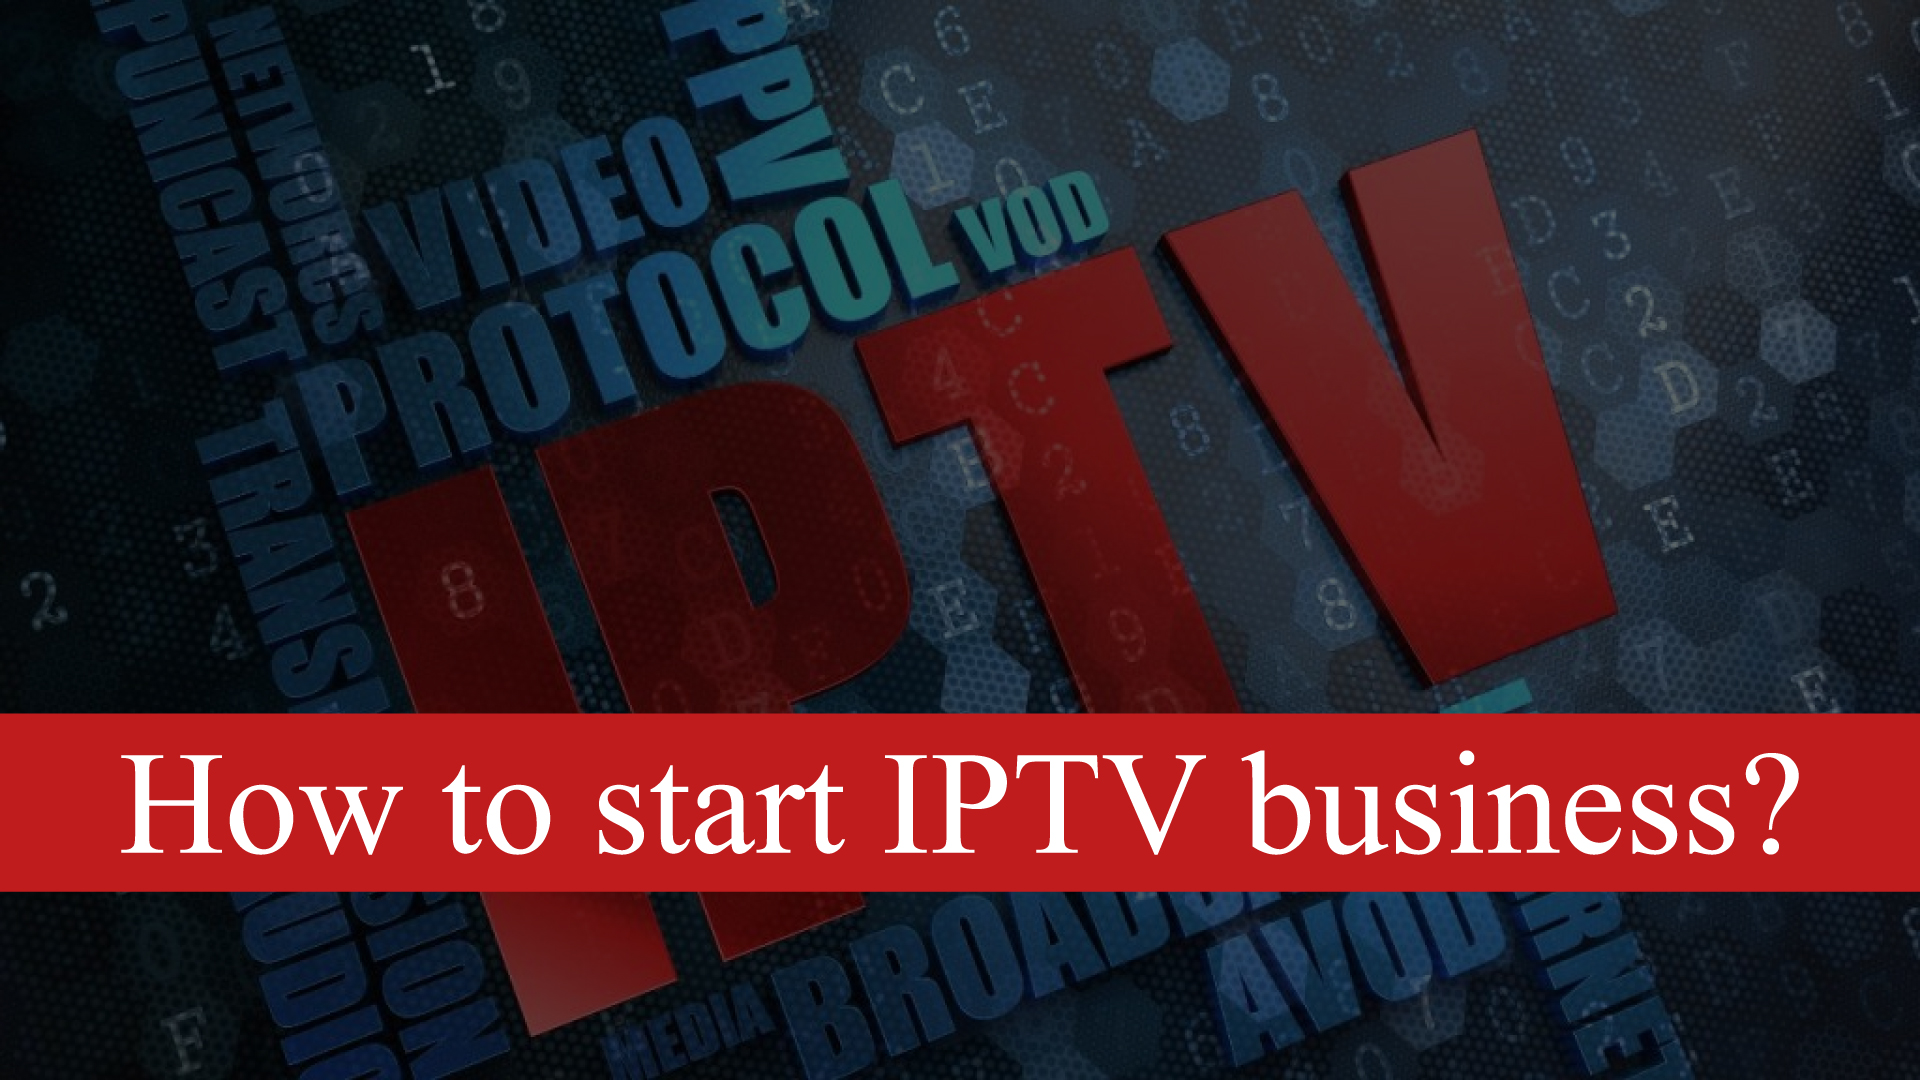 How to start an IPTV business